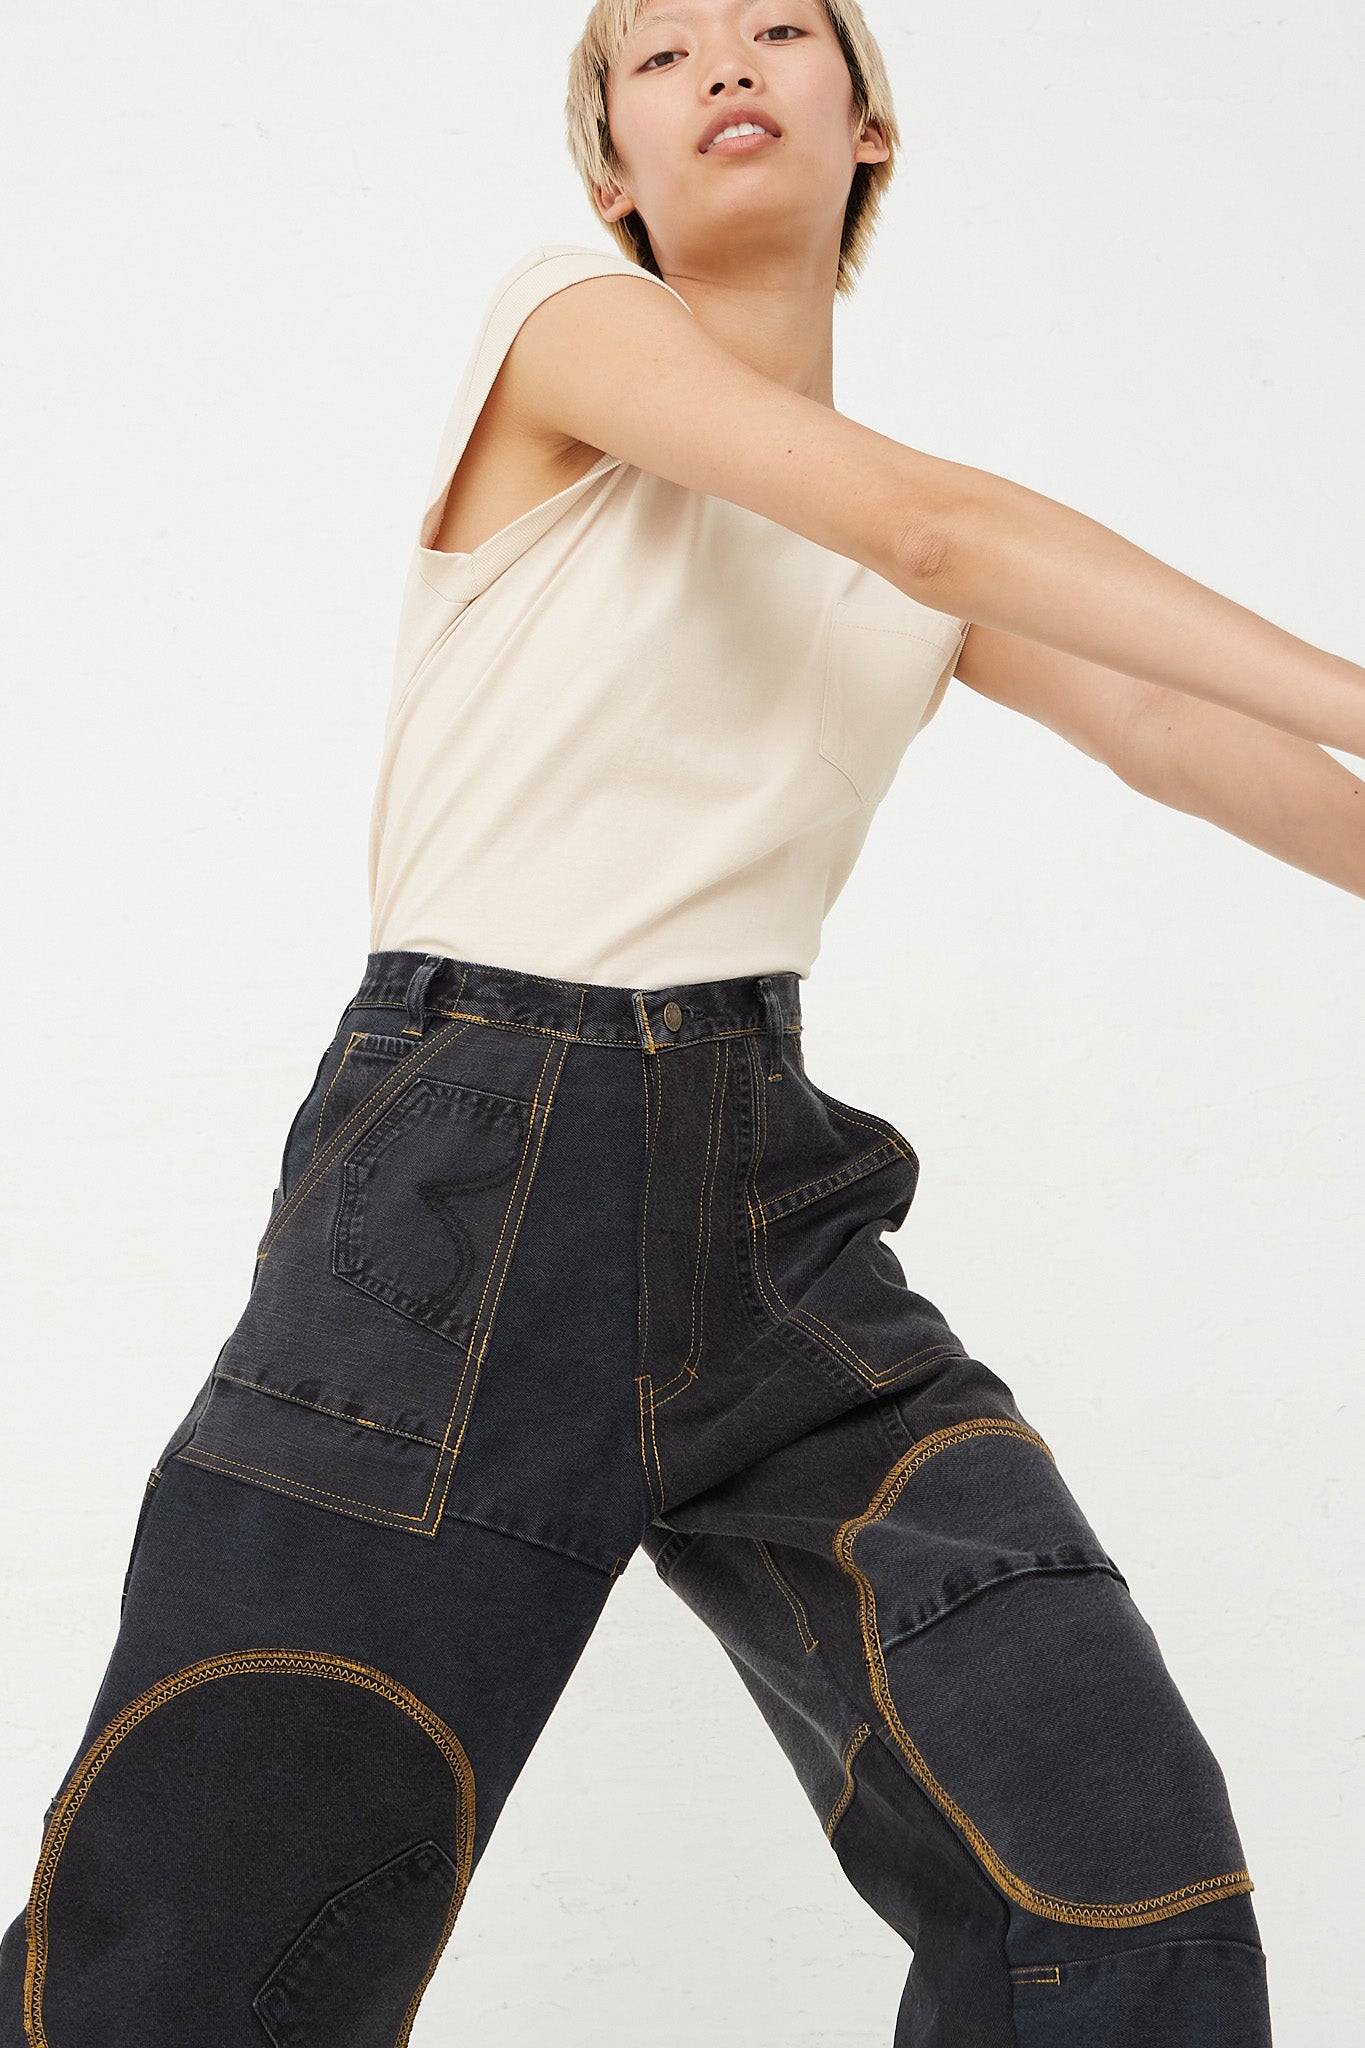 WildRootz - Reworked Jeans in Black Variation B - M front pocket detail